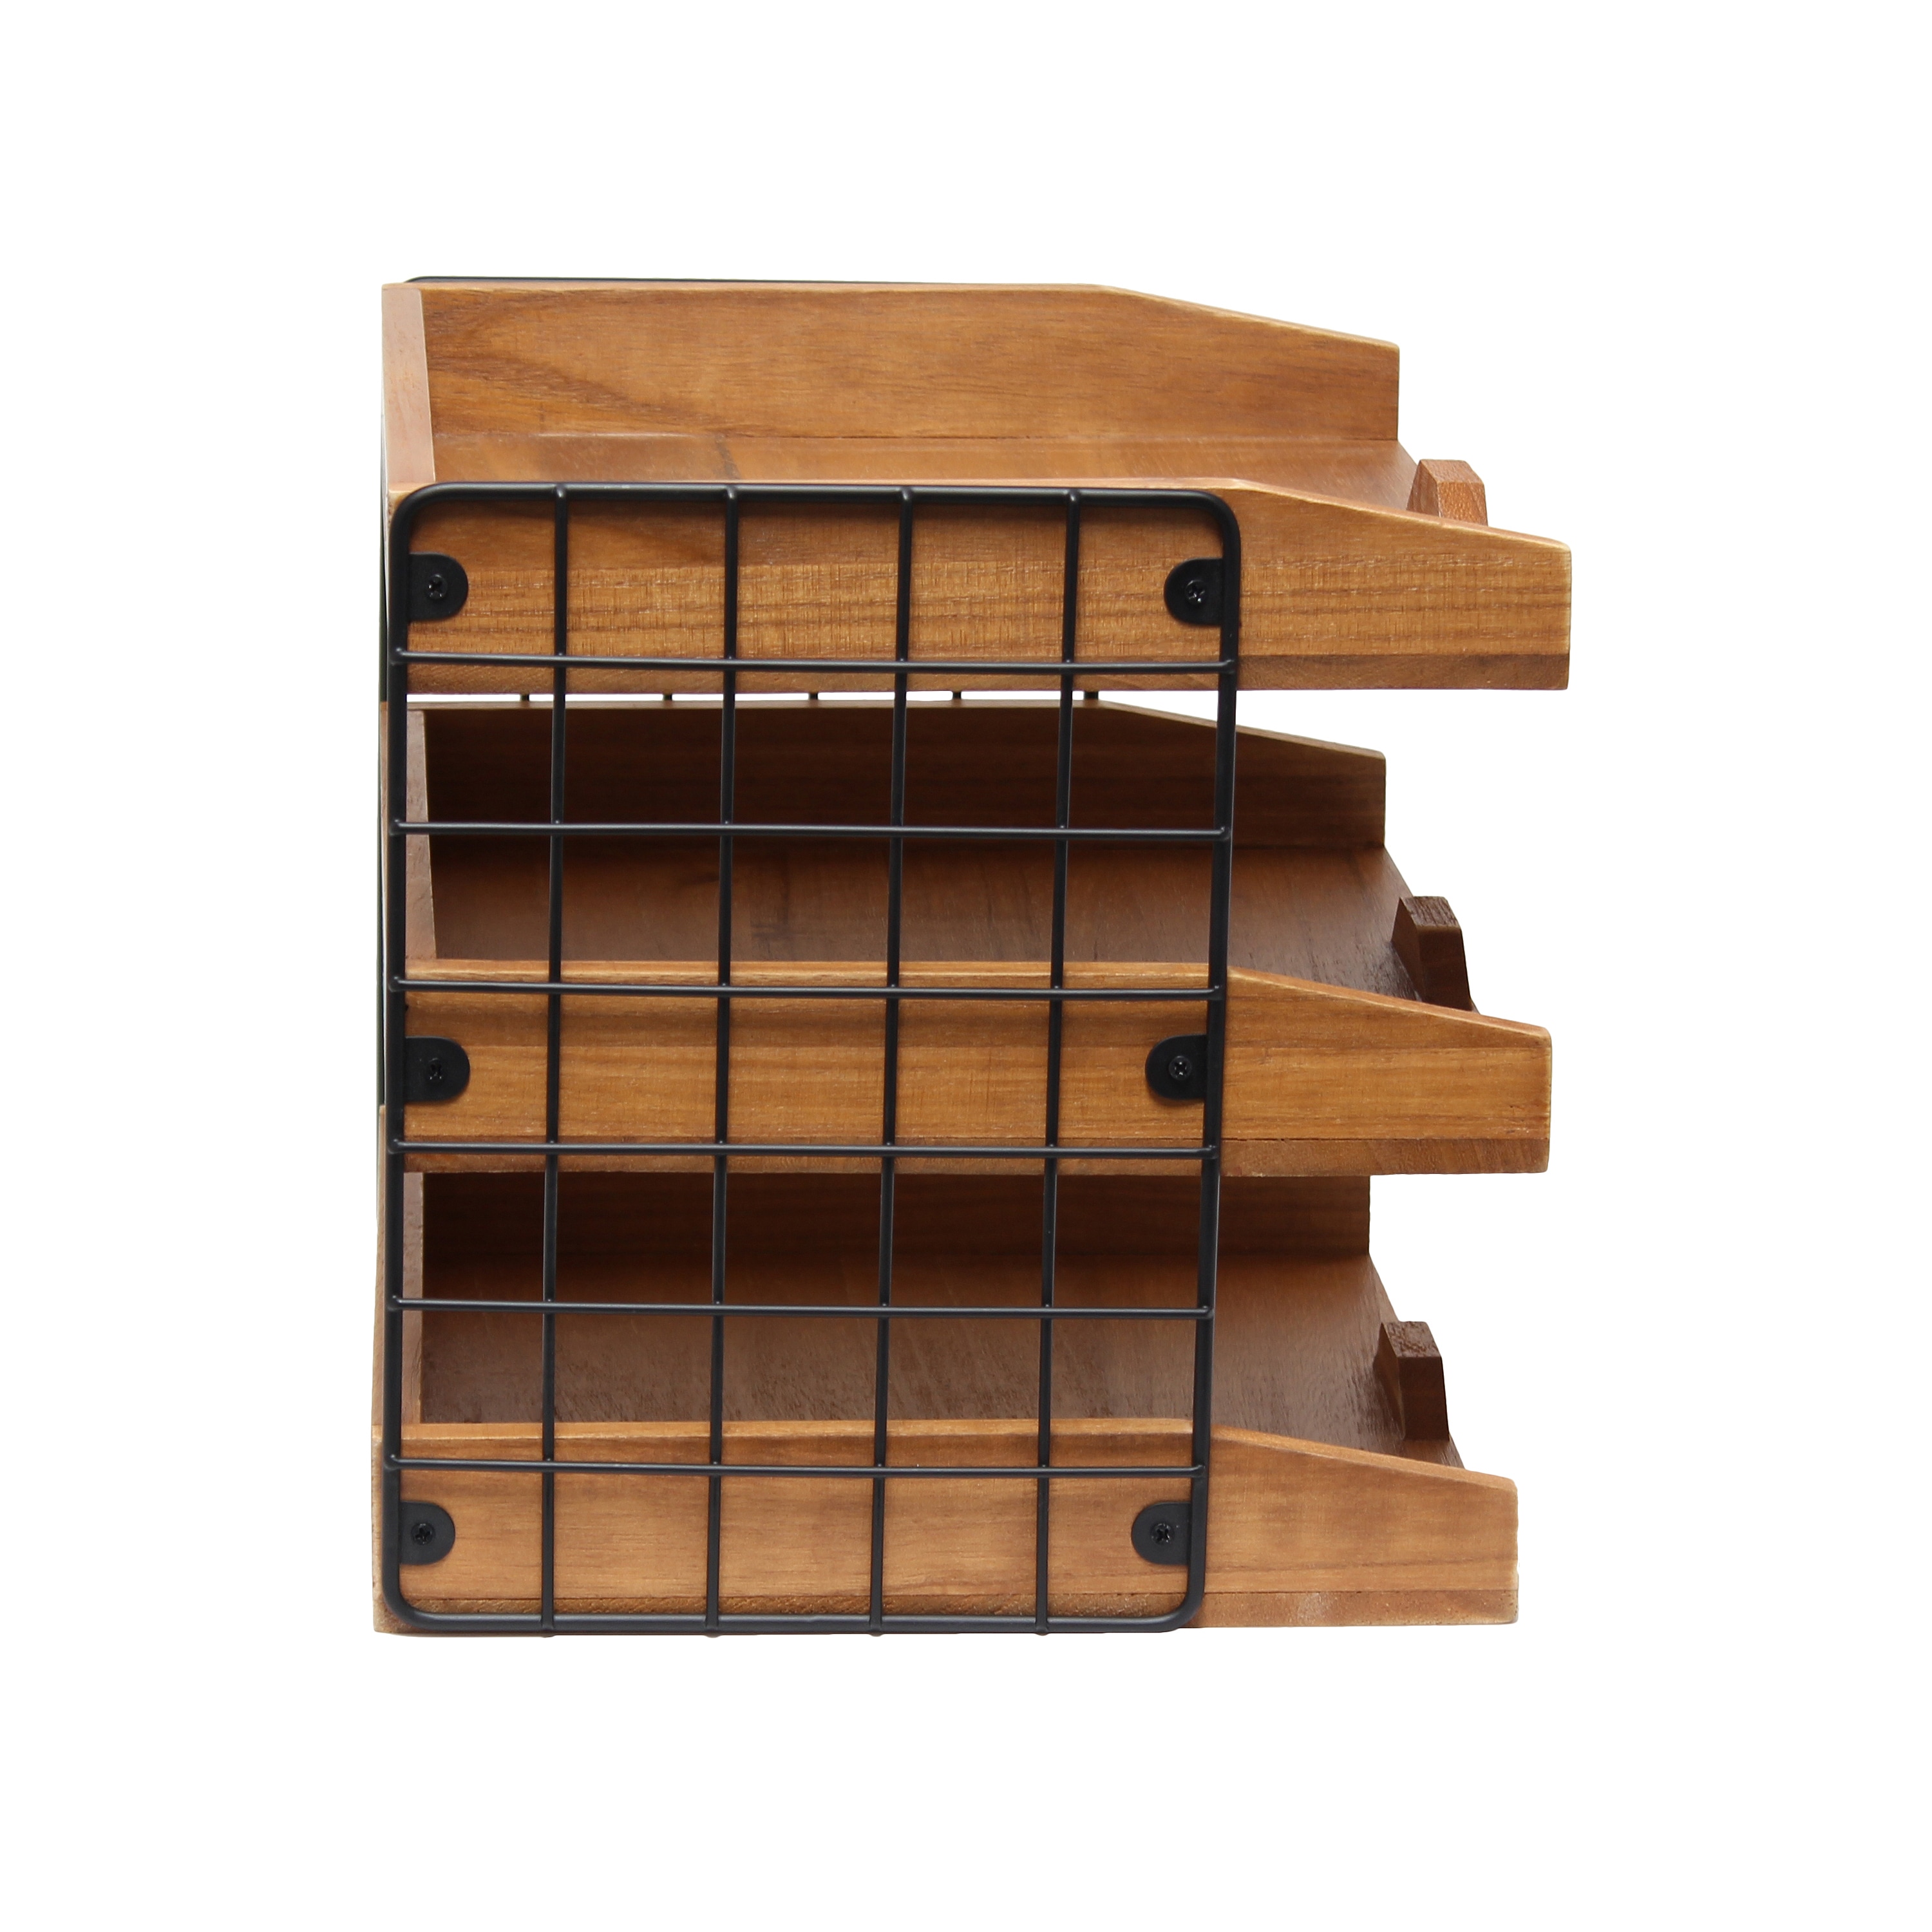 Elegant Designs Wood 3 Compartment Desktop Organizer Set, Pack of 1, Brown